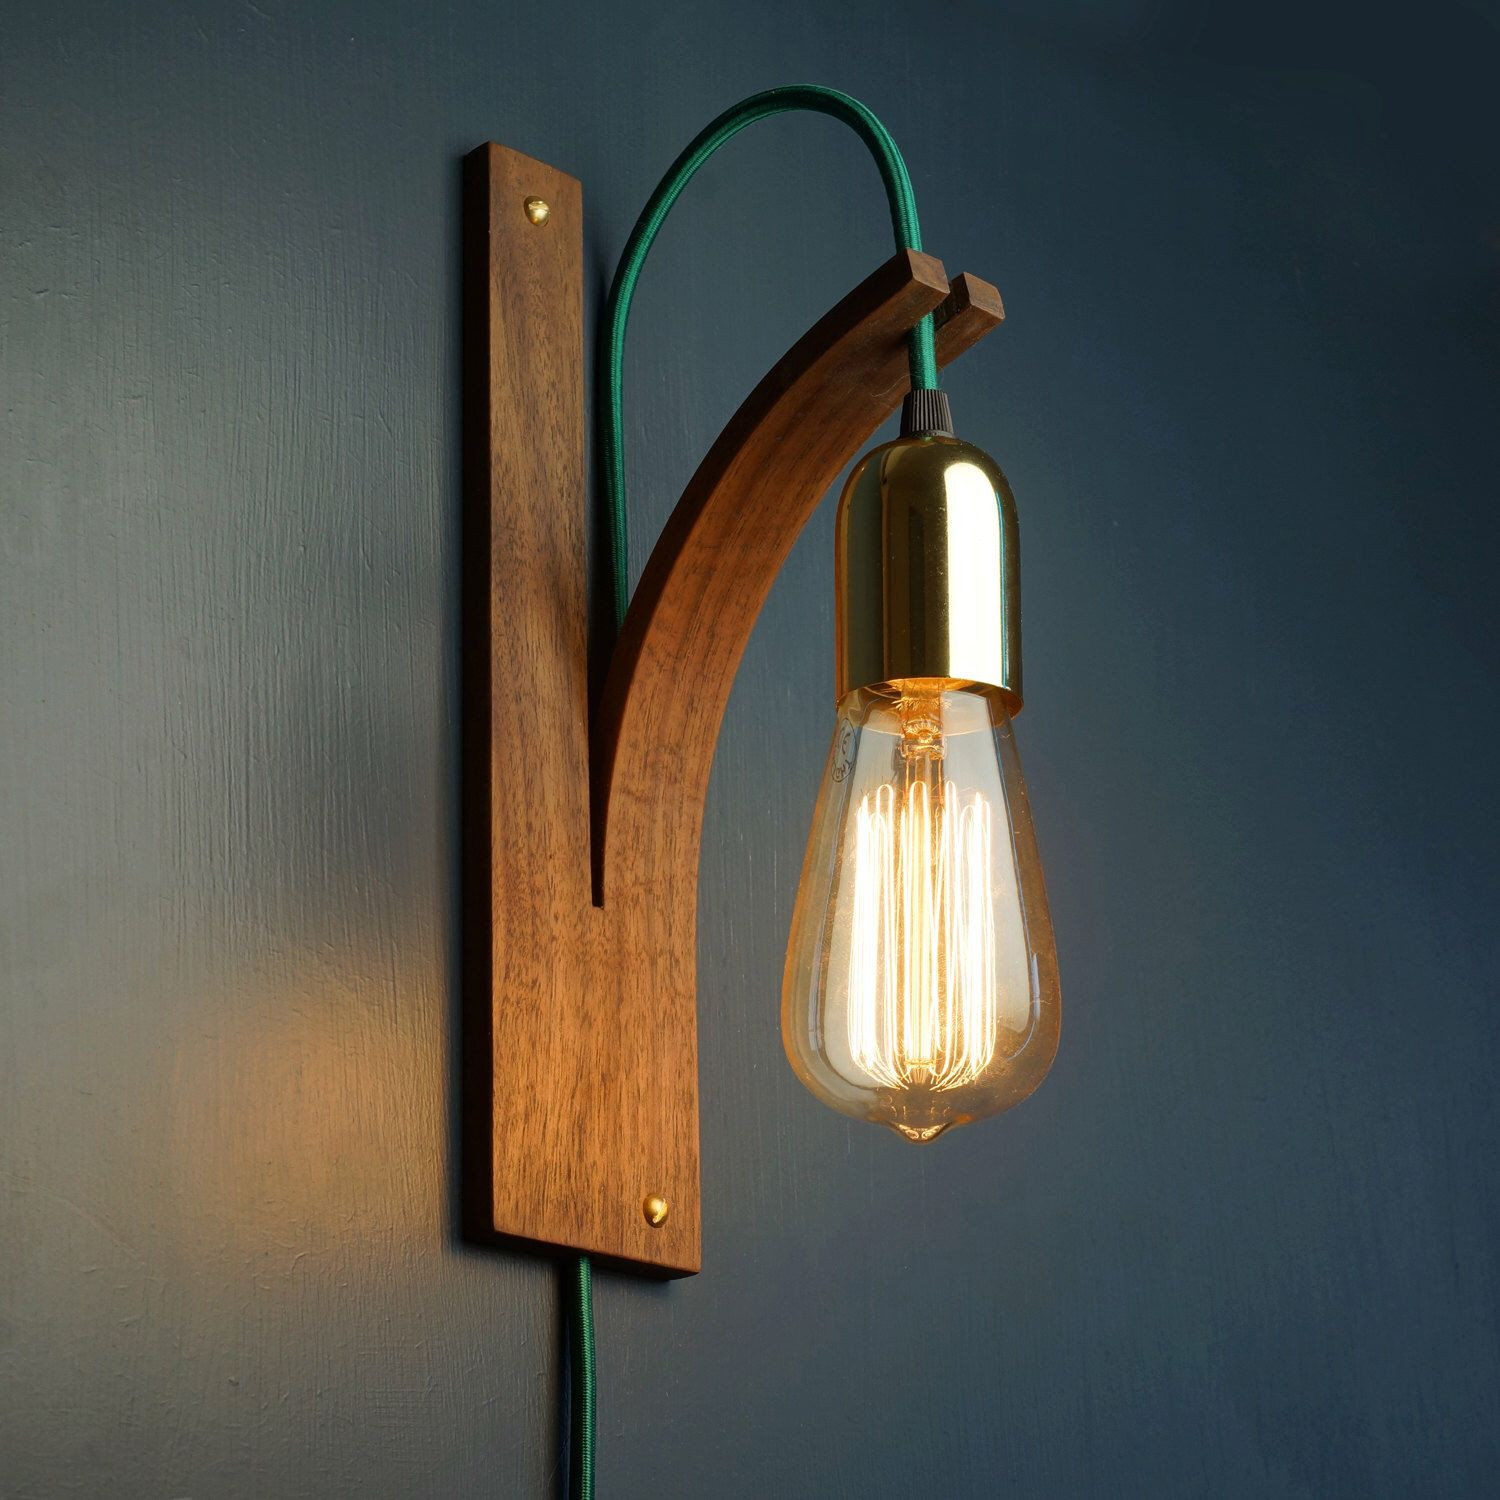 Wooden Lamp Designs Walnut Wall Light Wall Scone Interior Lighting Wooden